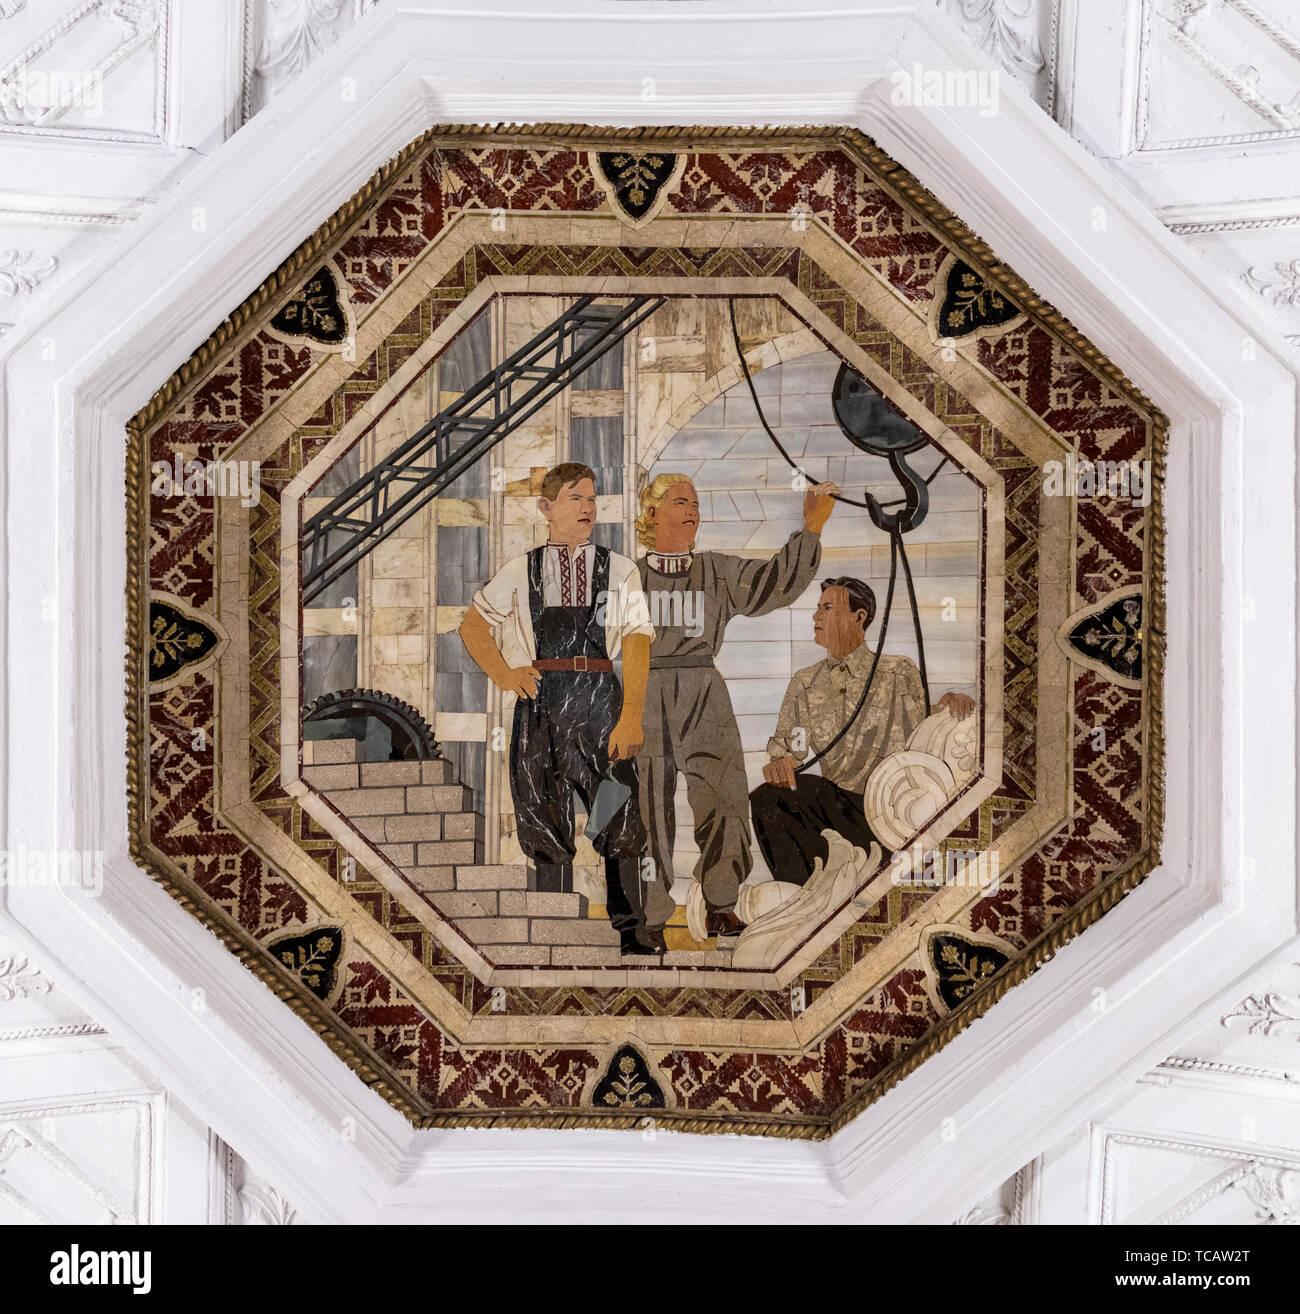 Ceiling mosaic decoration, Novoslobodskaya Station, Moscow Subway, Moscow, Russia Stock Photo